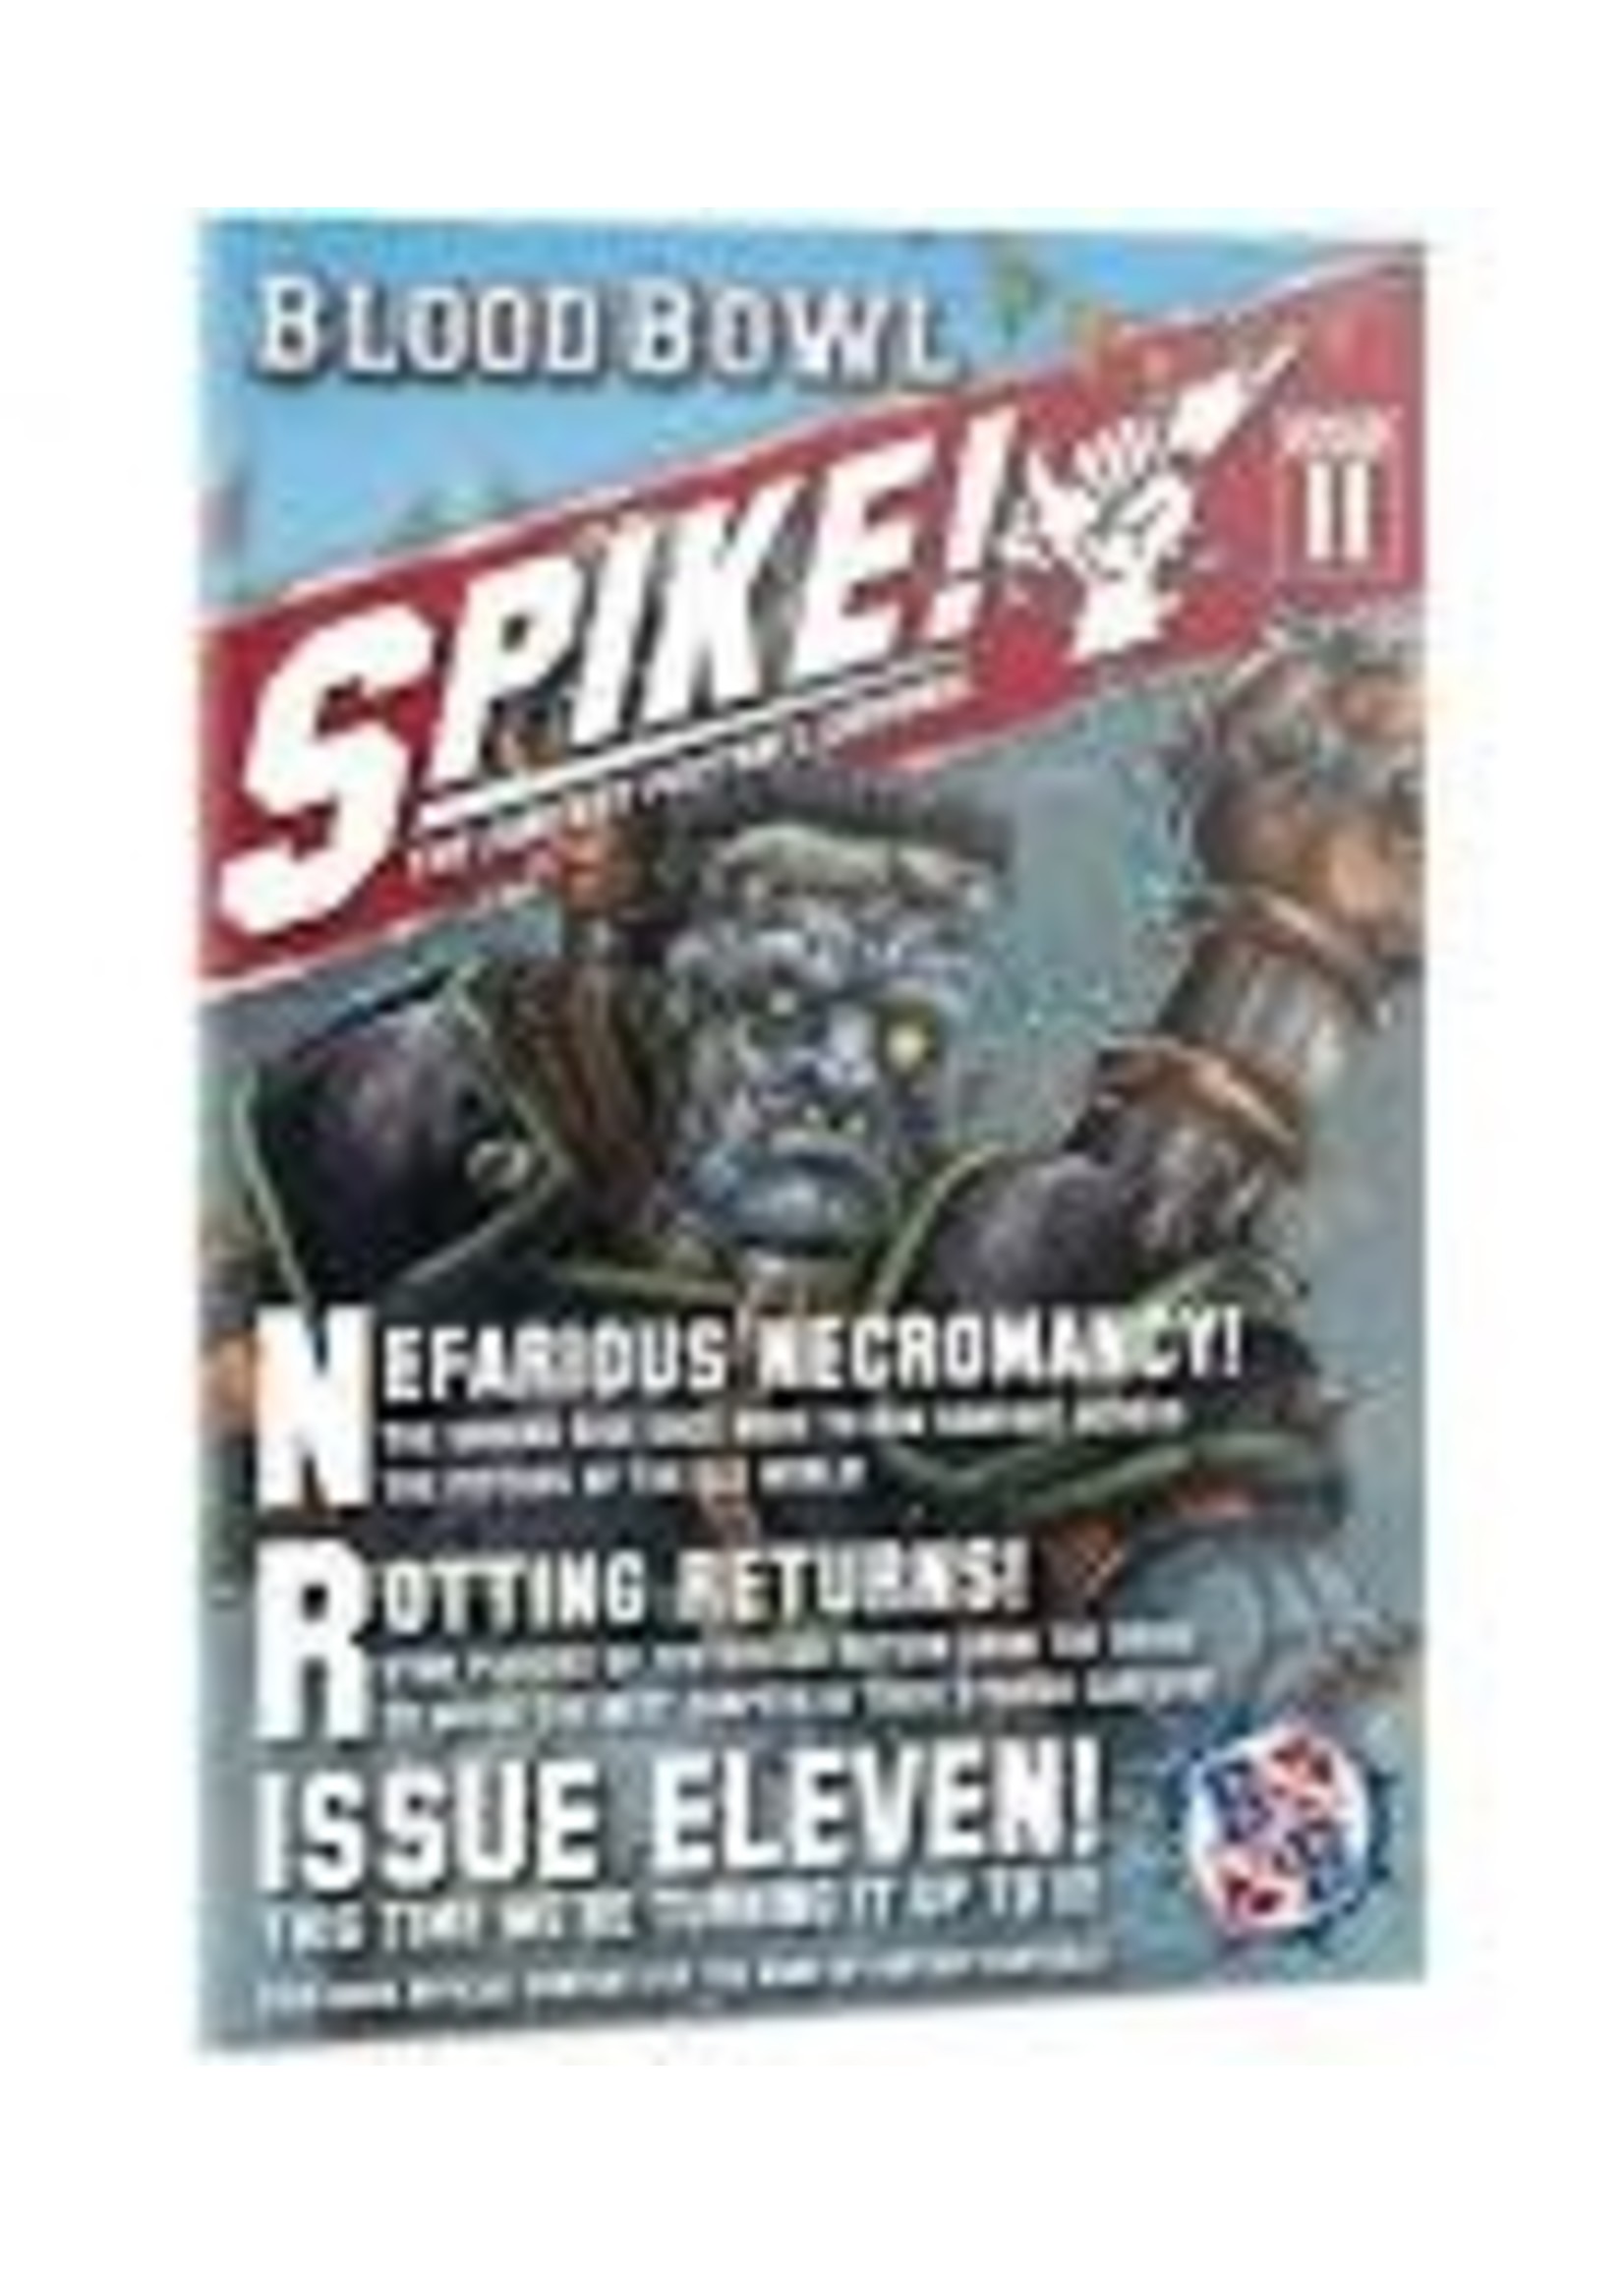 Games Workshop BLOOD BOWL: SPIKE! JOURNAL ISSUE 11